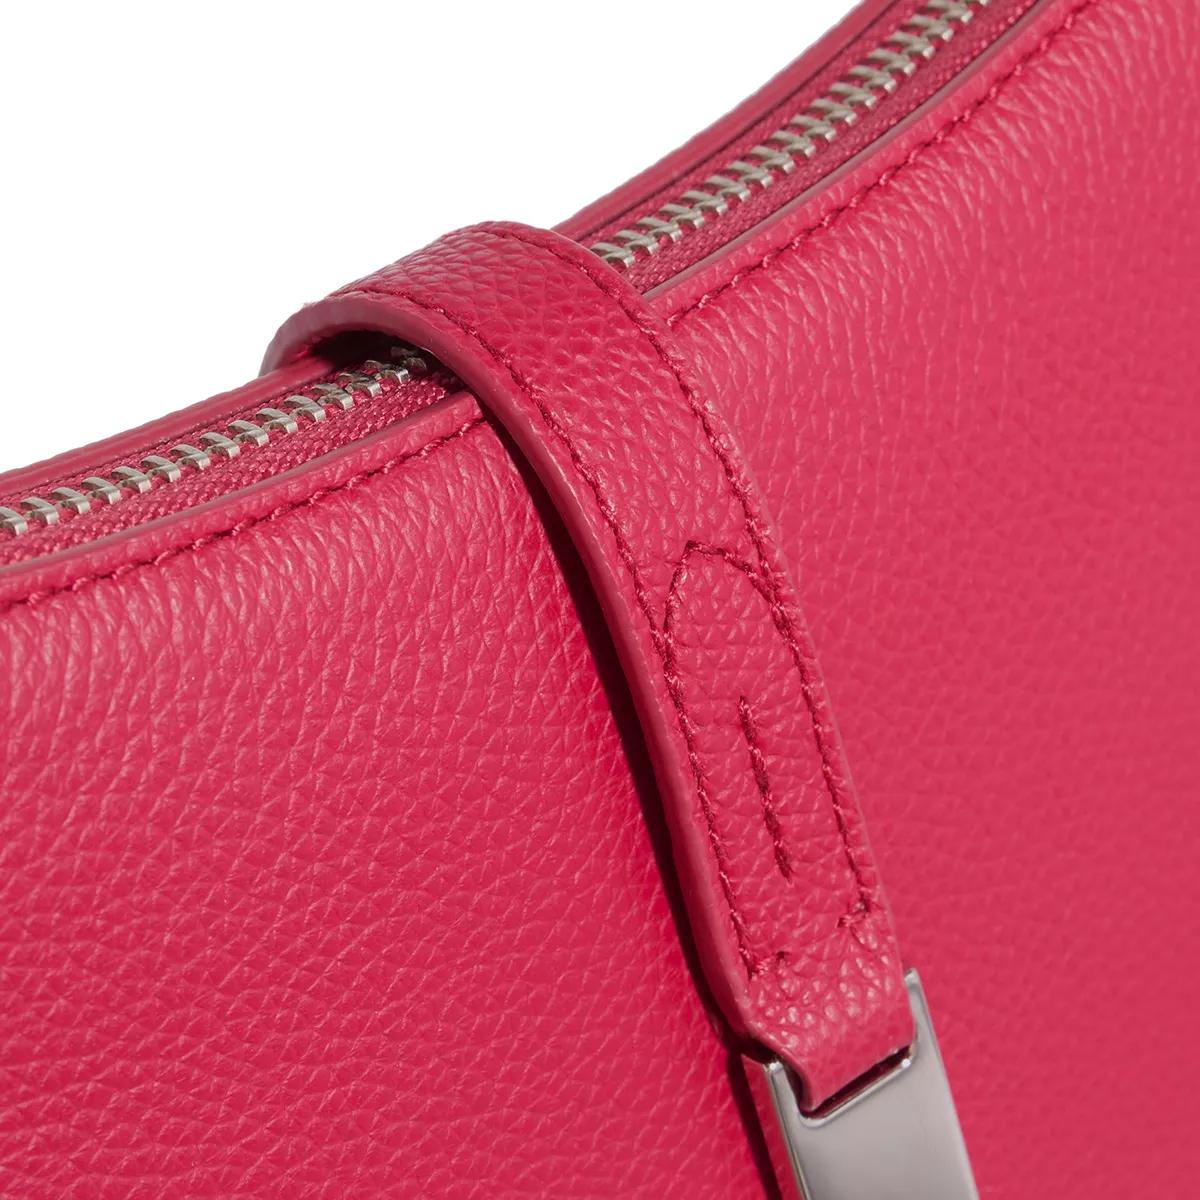 Polo Ralph Lauren Hobo bags Shoulder Bag Small in roze